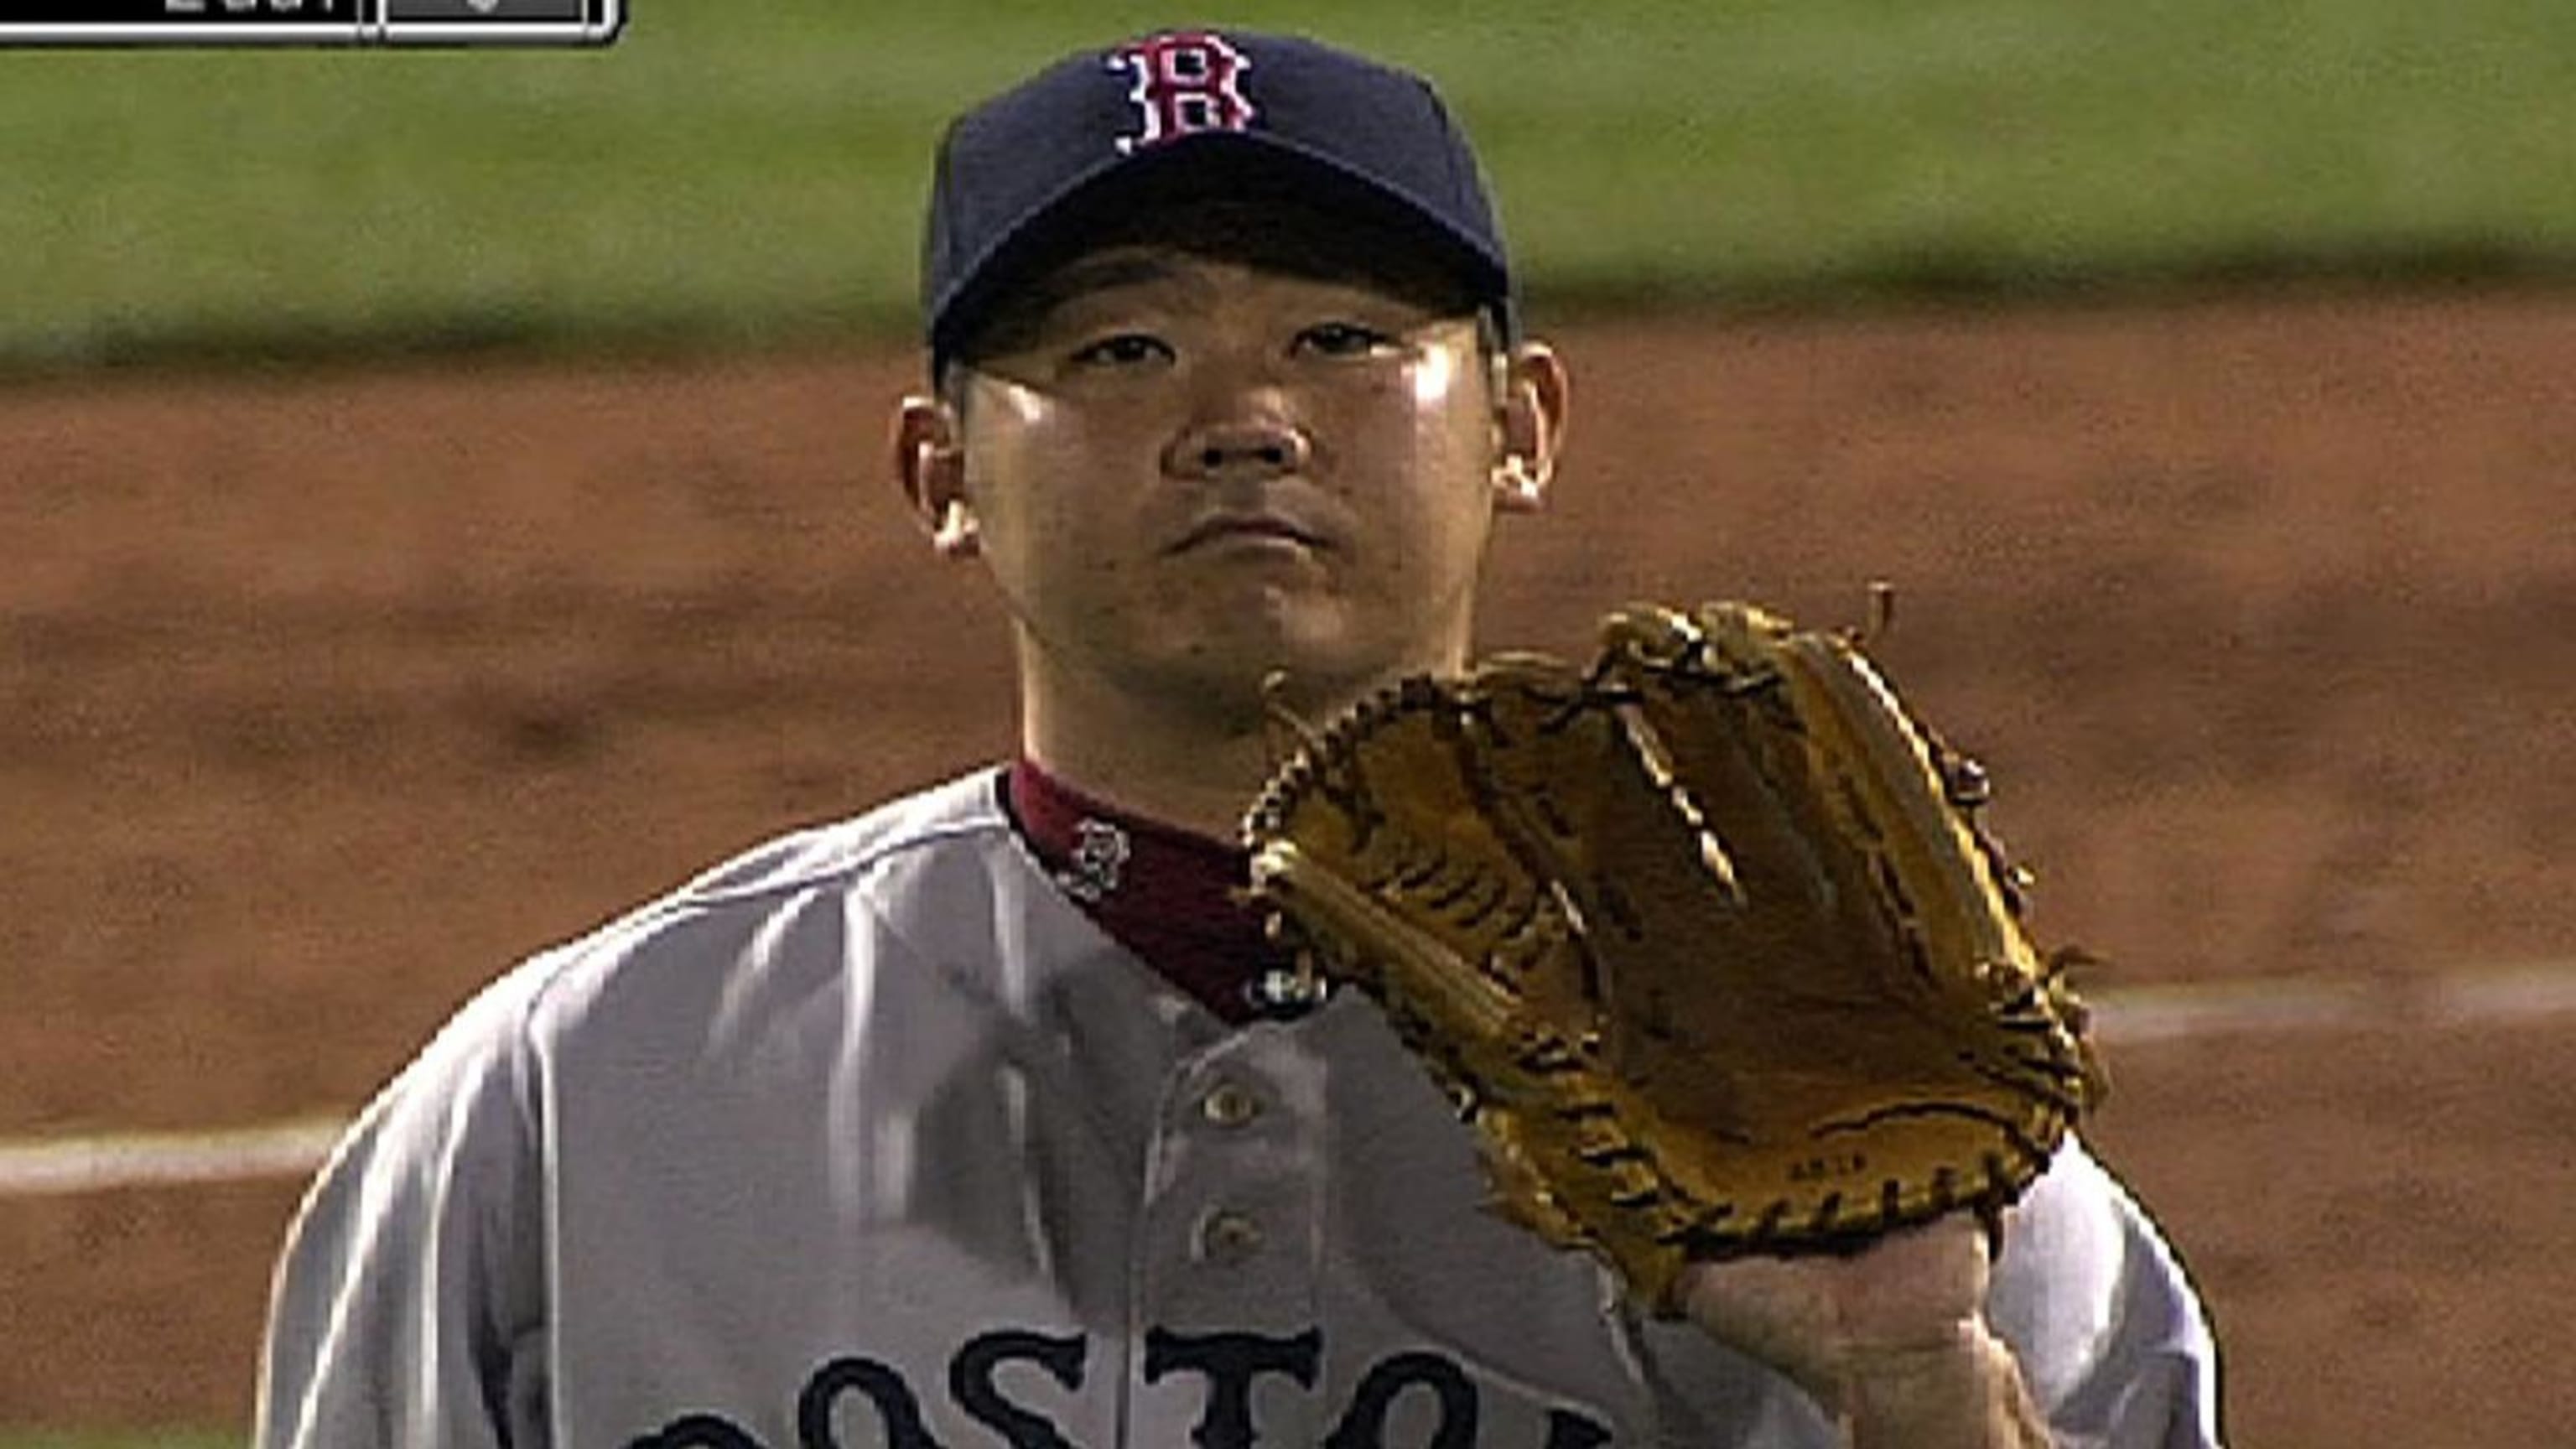 Boston Red Sox: Daisuke Matsuzaka giving it one last try